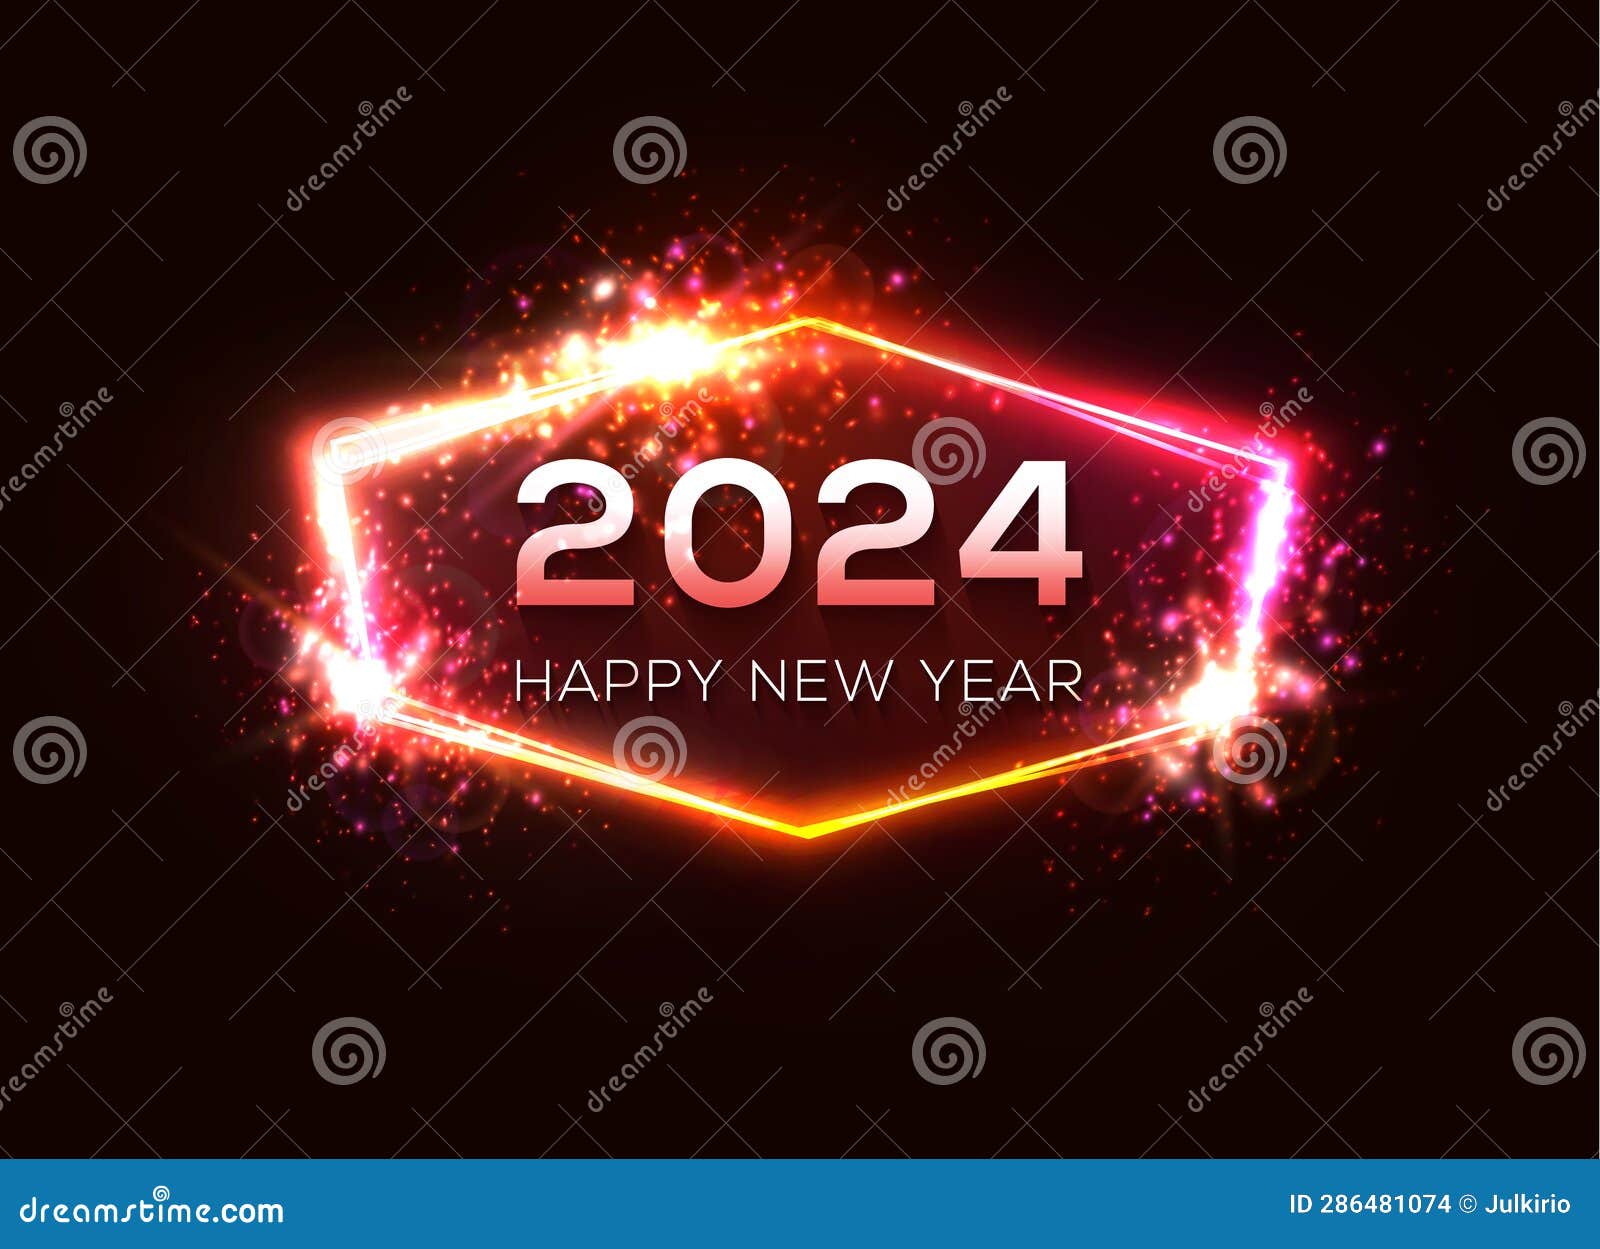 Happy New Year 2024 Hexagon Neon Sign on Dark Red Stock Photo - Image ...